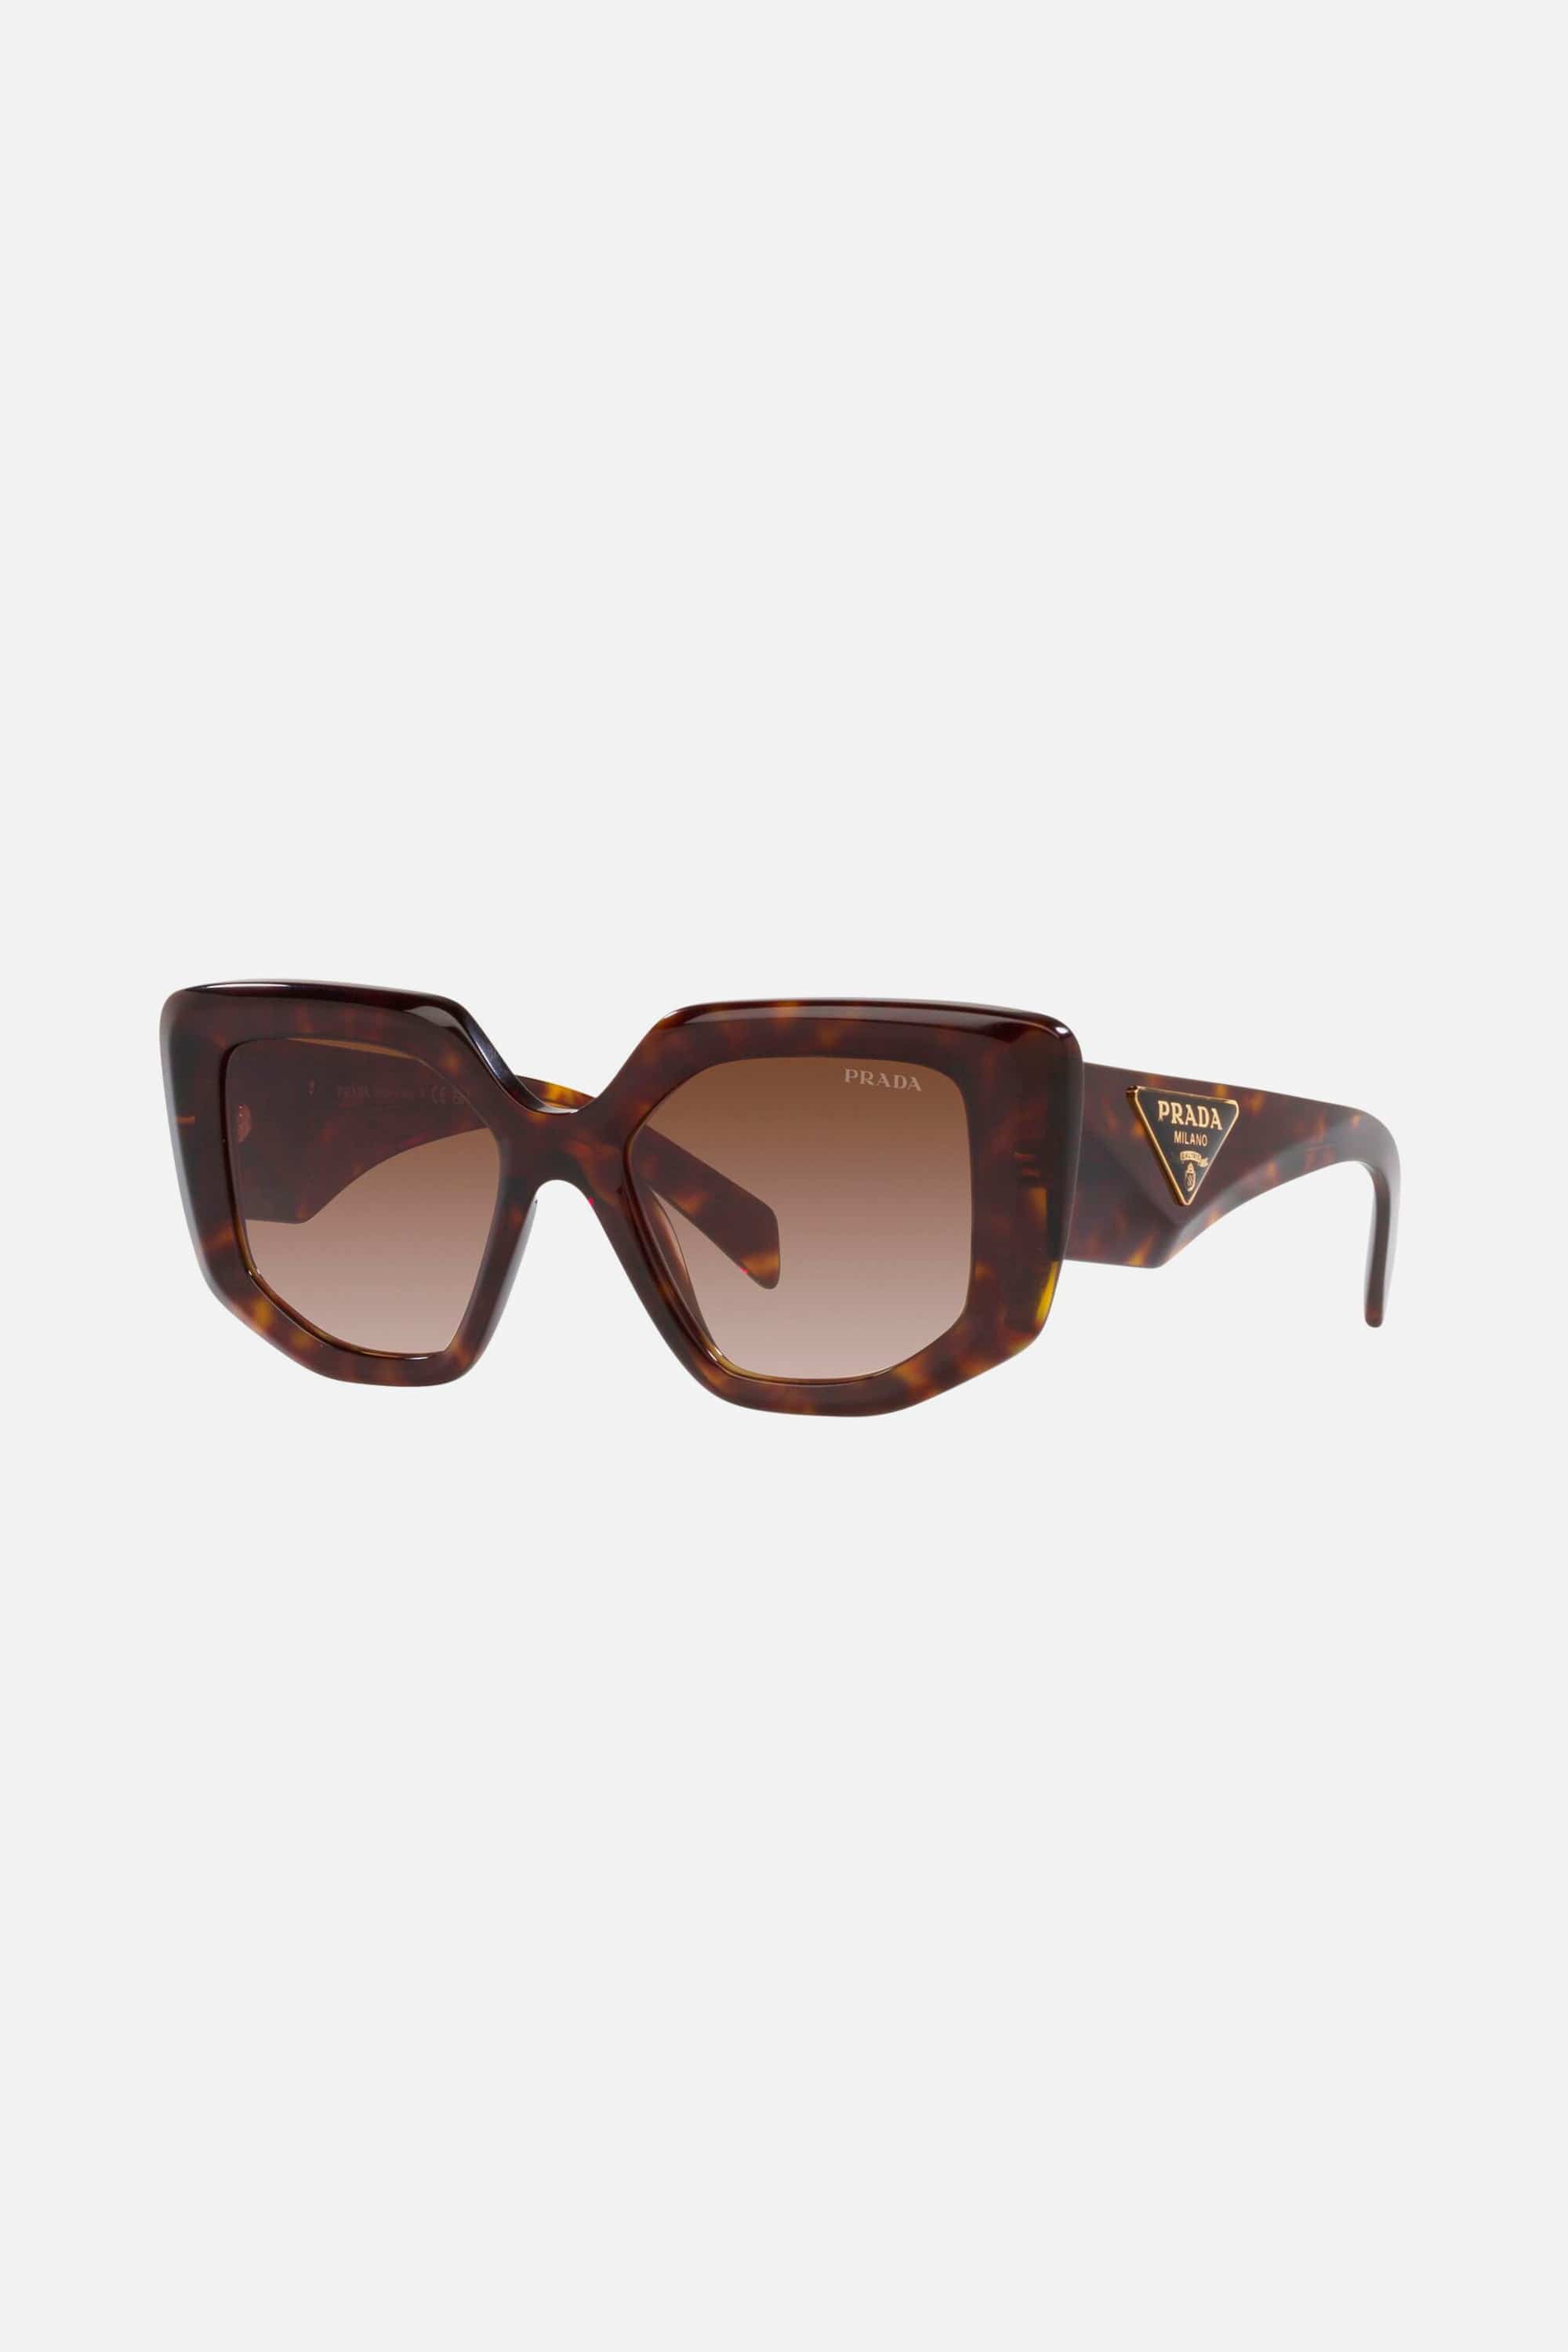 Prada havana butterfly shape sunglasses - Eyewear Club